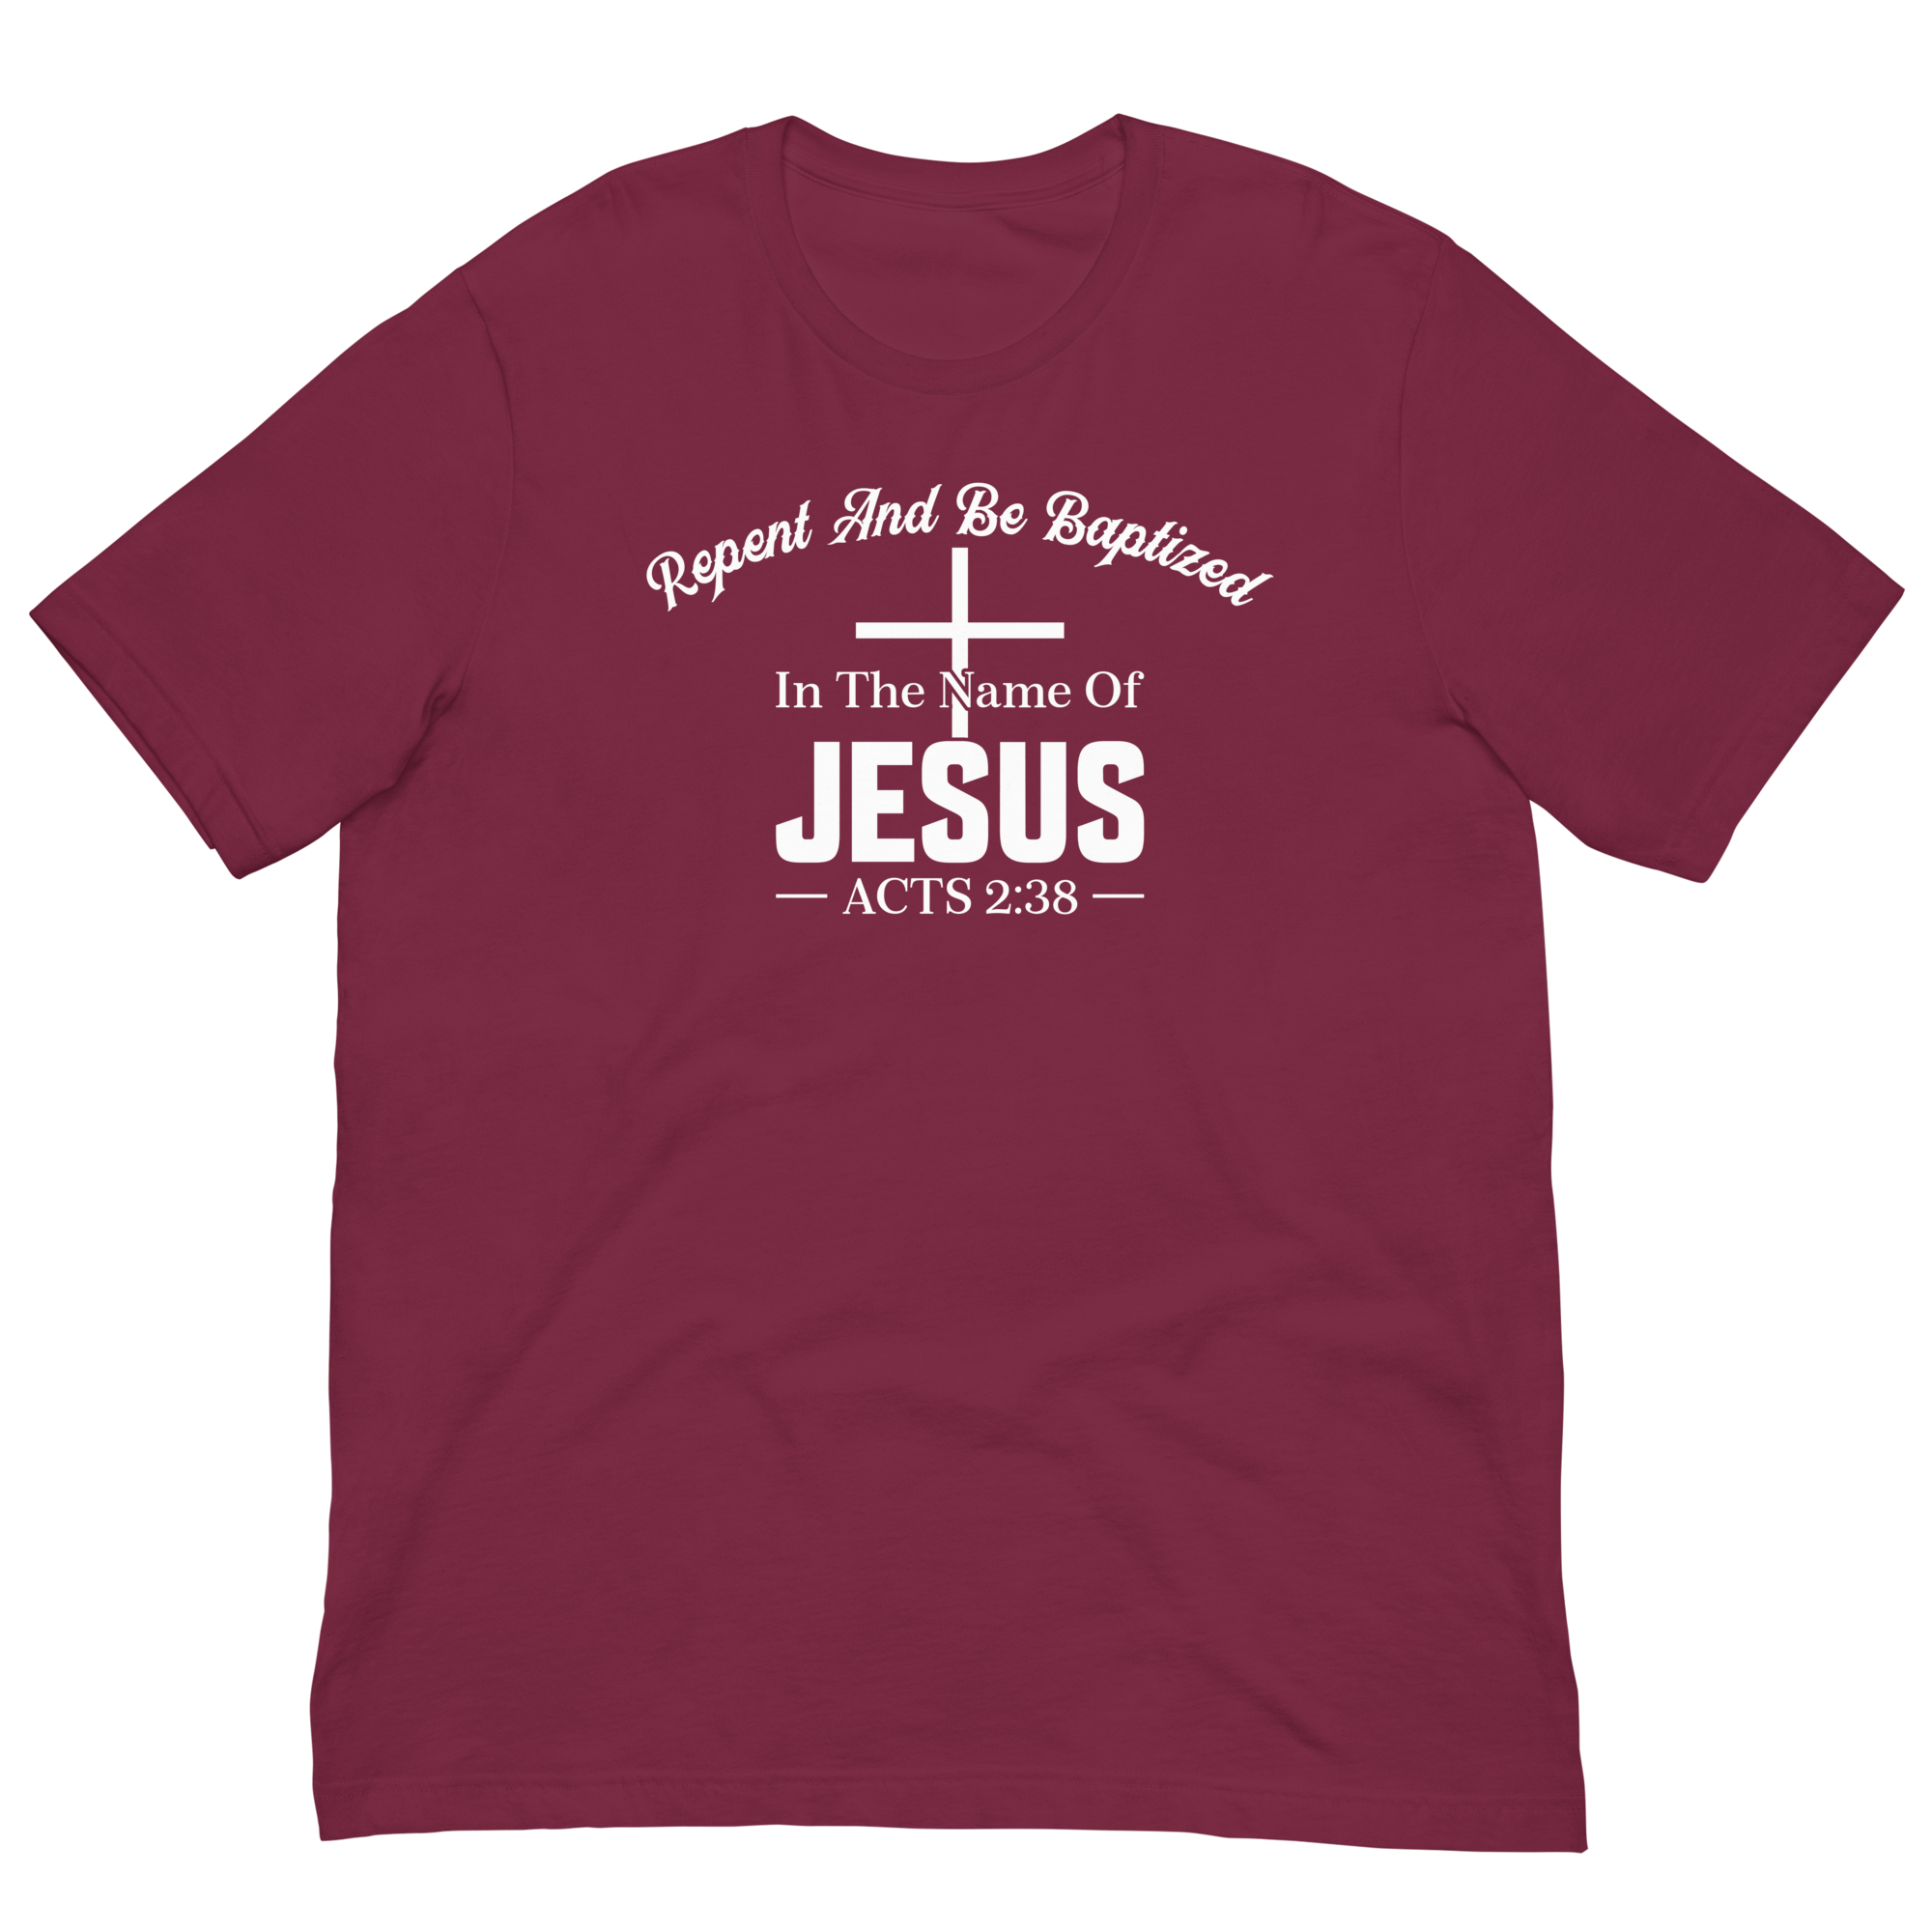 Acts 2:38 white Unisex t-shirt